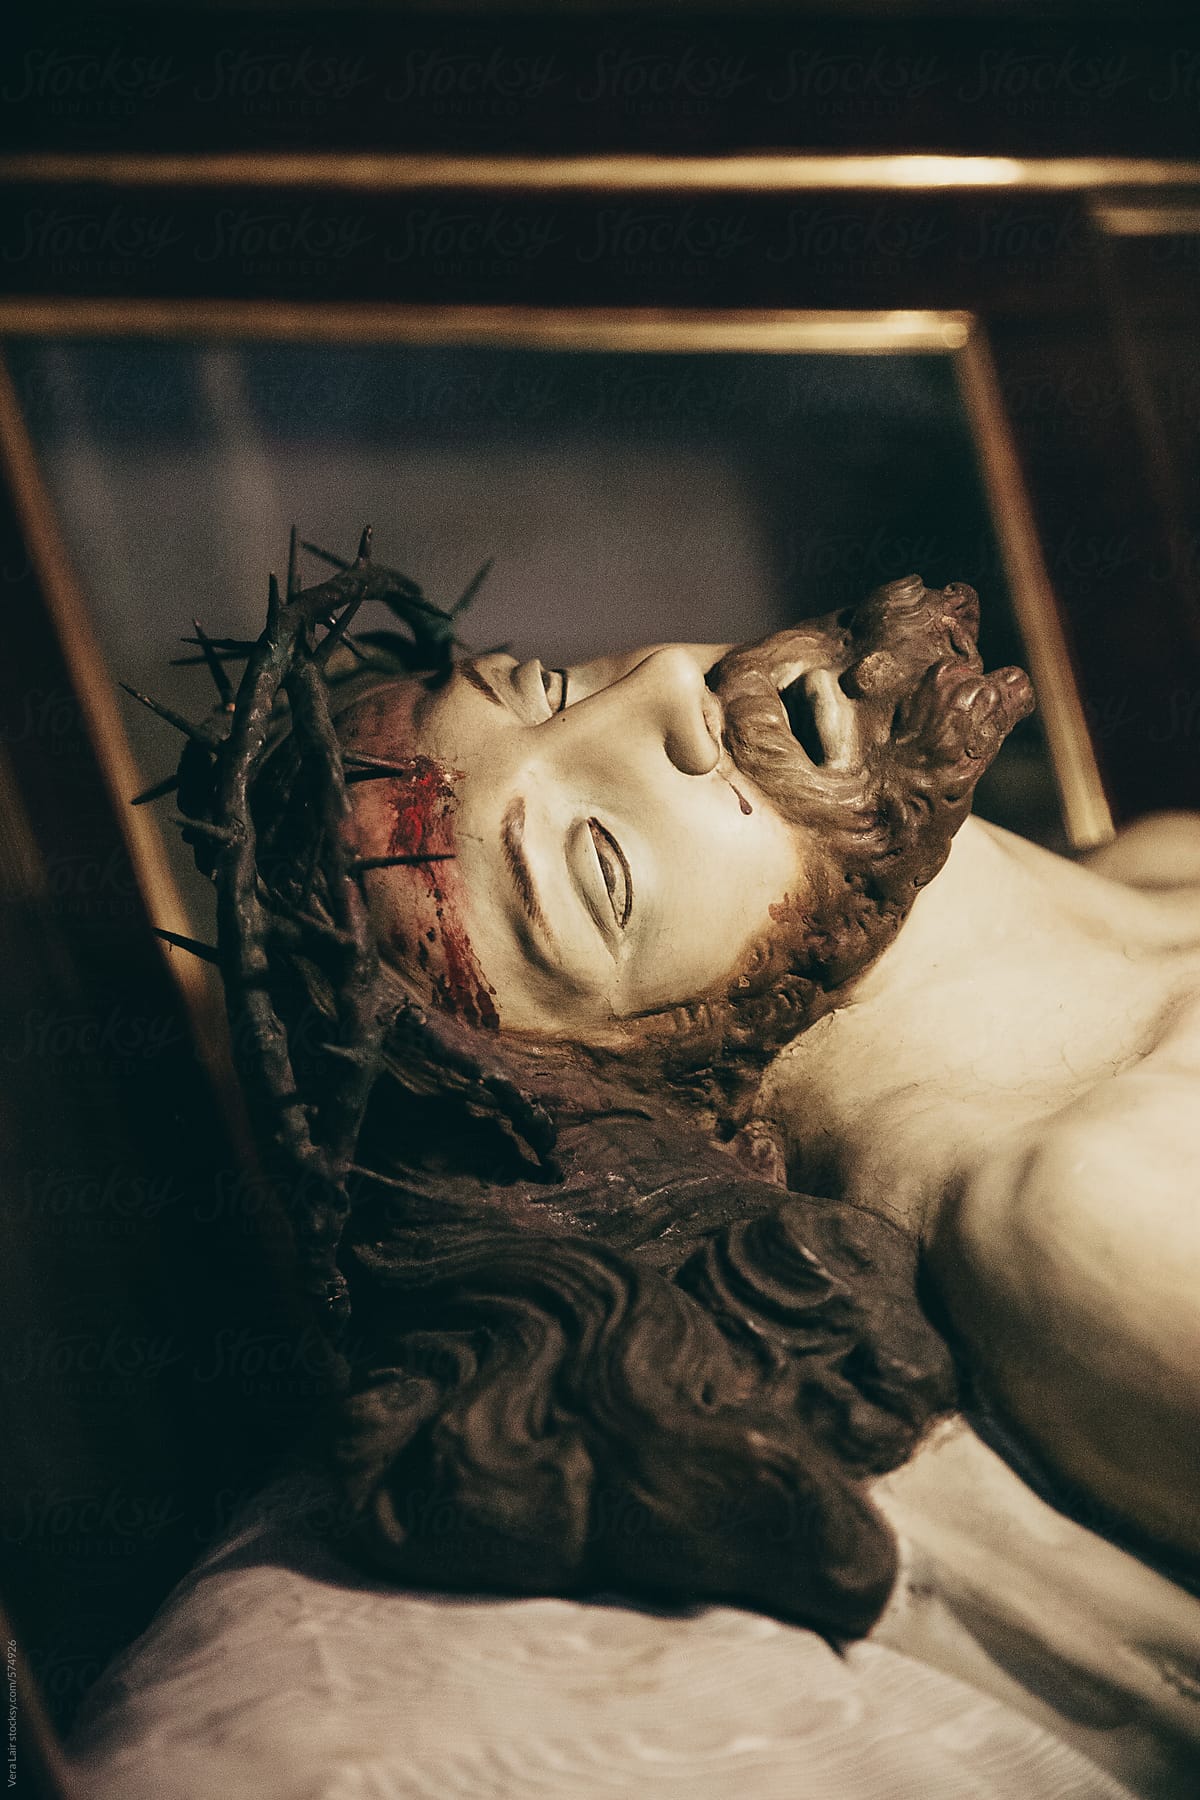 Bloody statue of Jesus's body